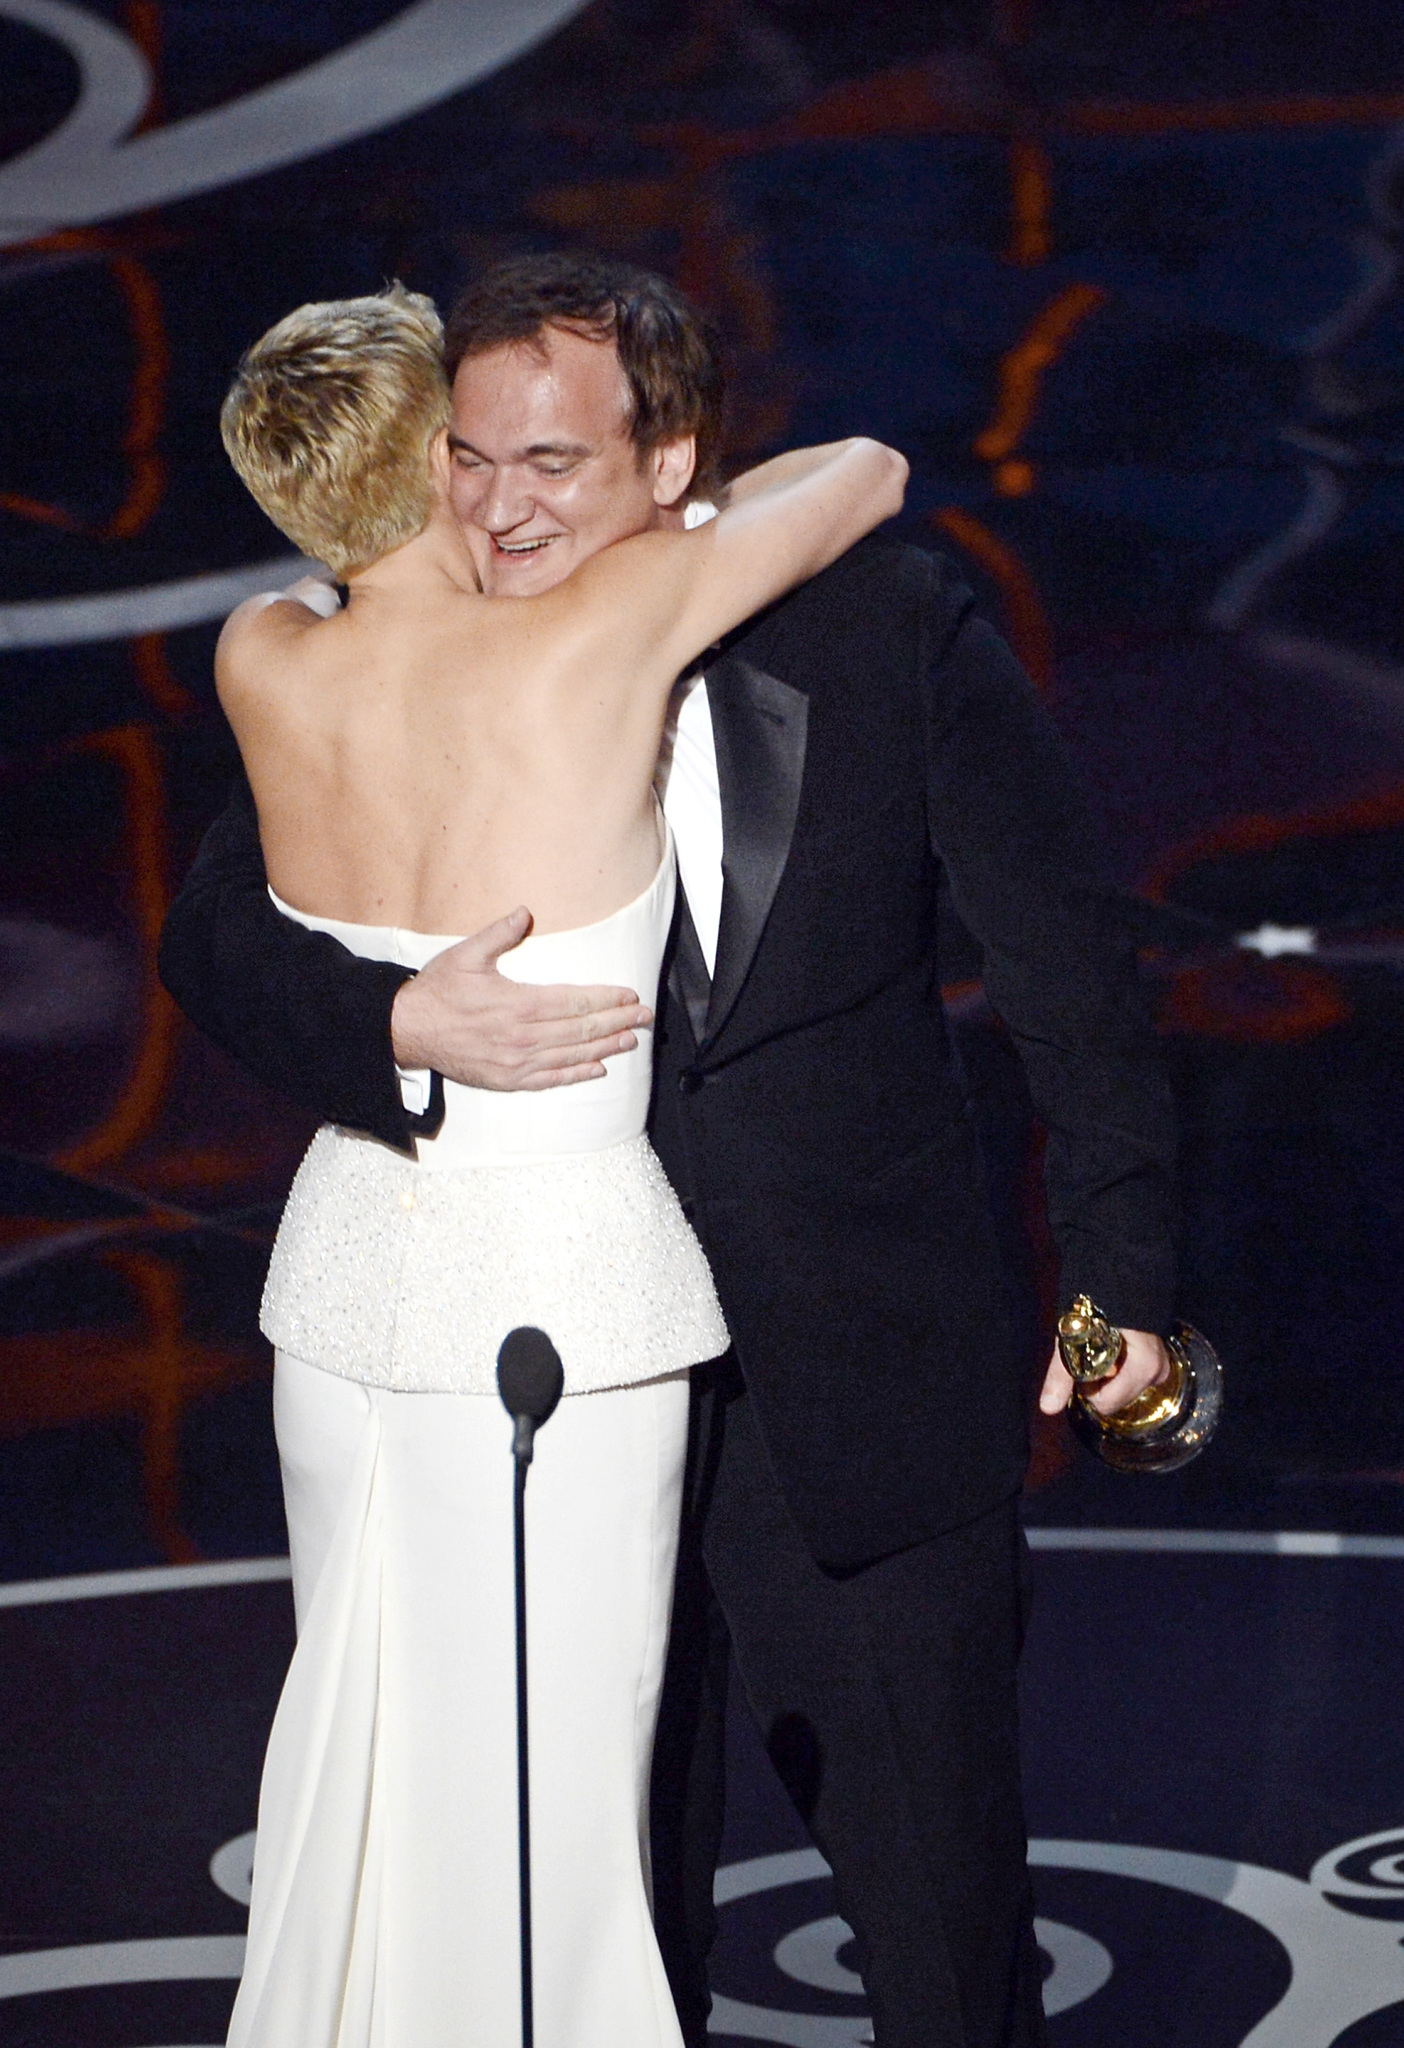 Quentin Tarantino and Charlize Theron